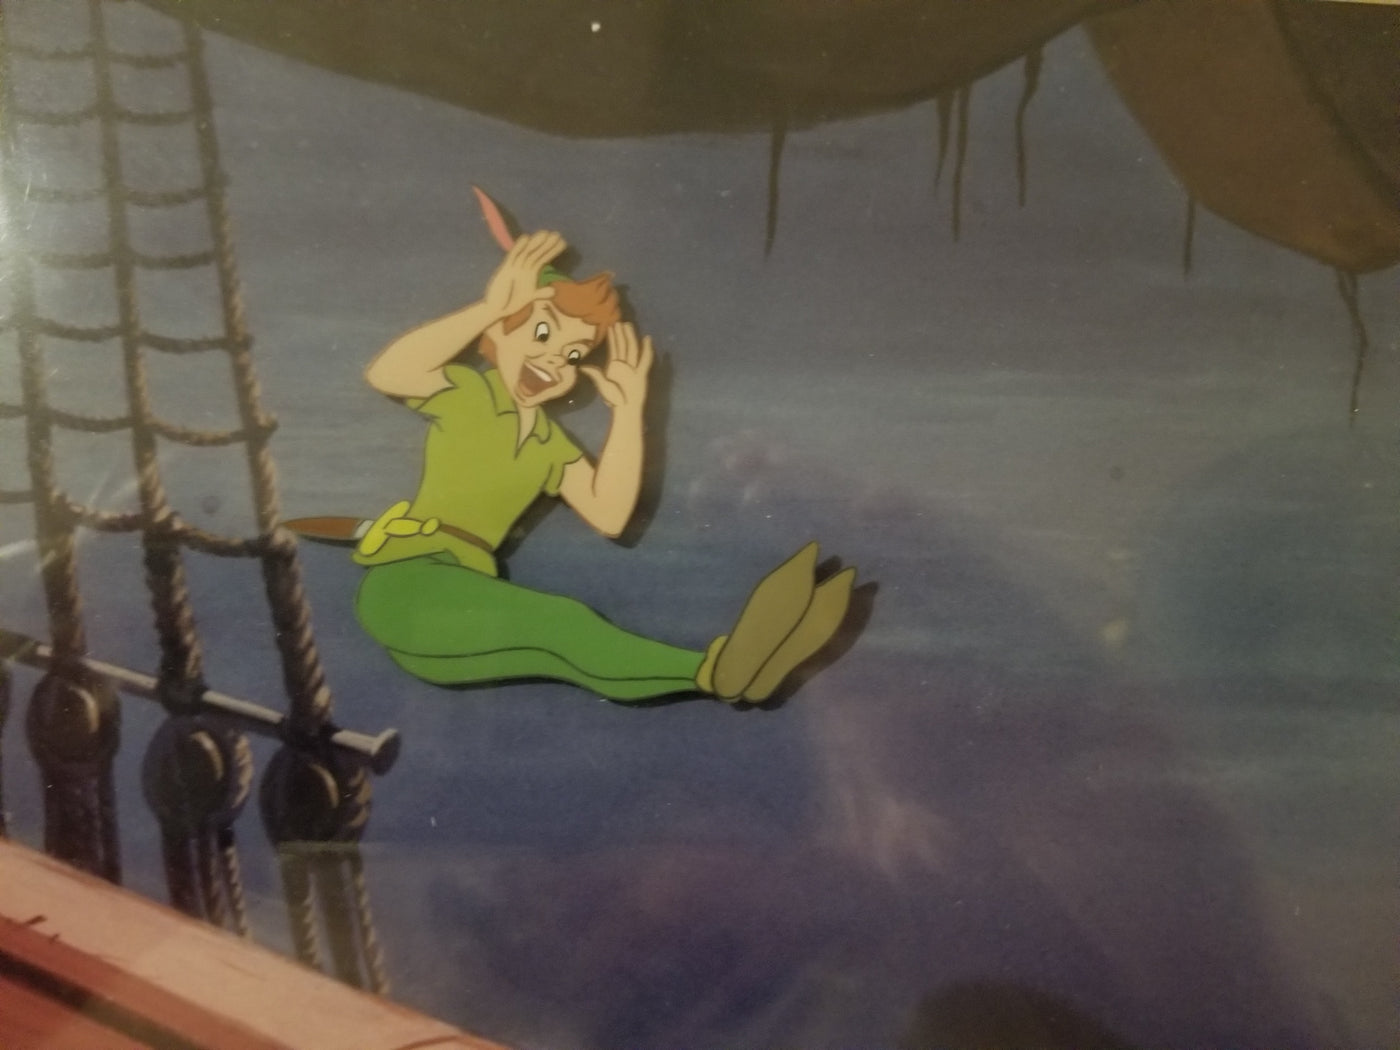 Original Walt Disney Production Cel featuring Peter Pan